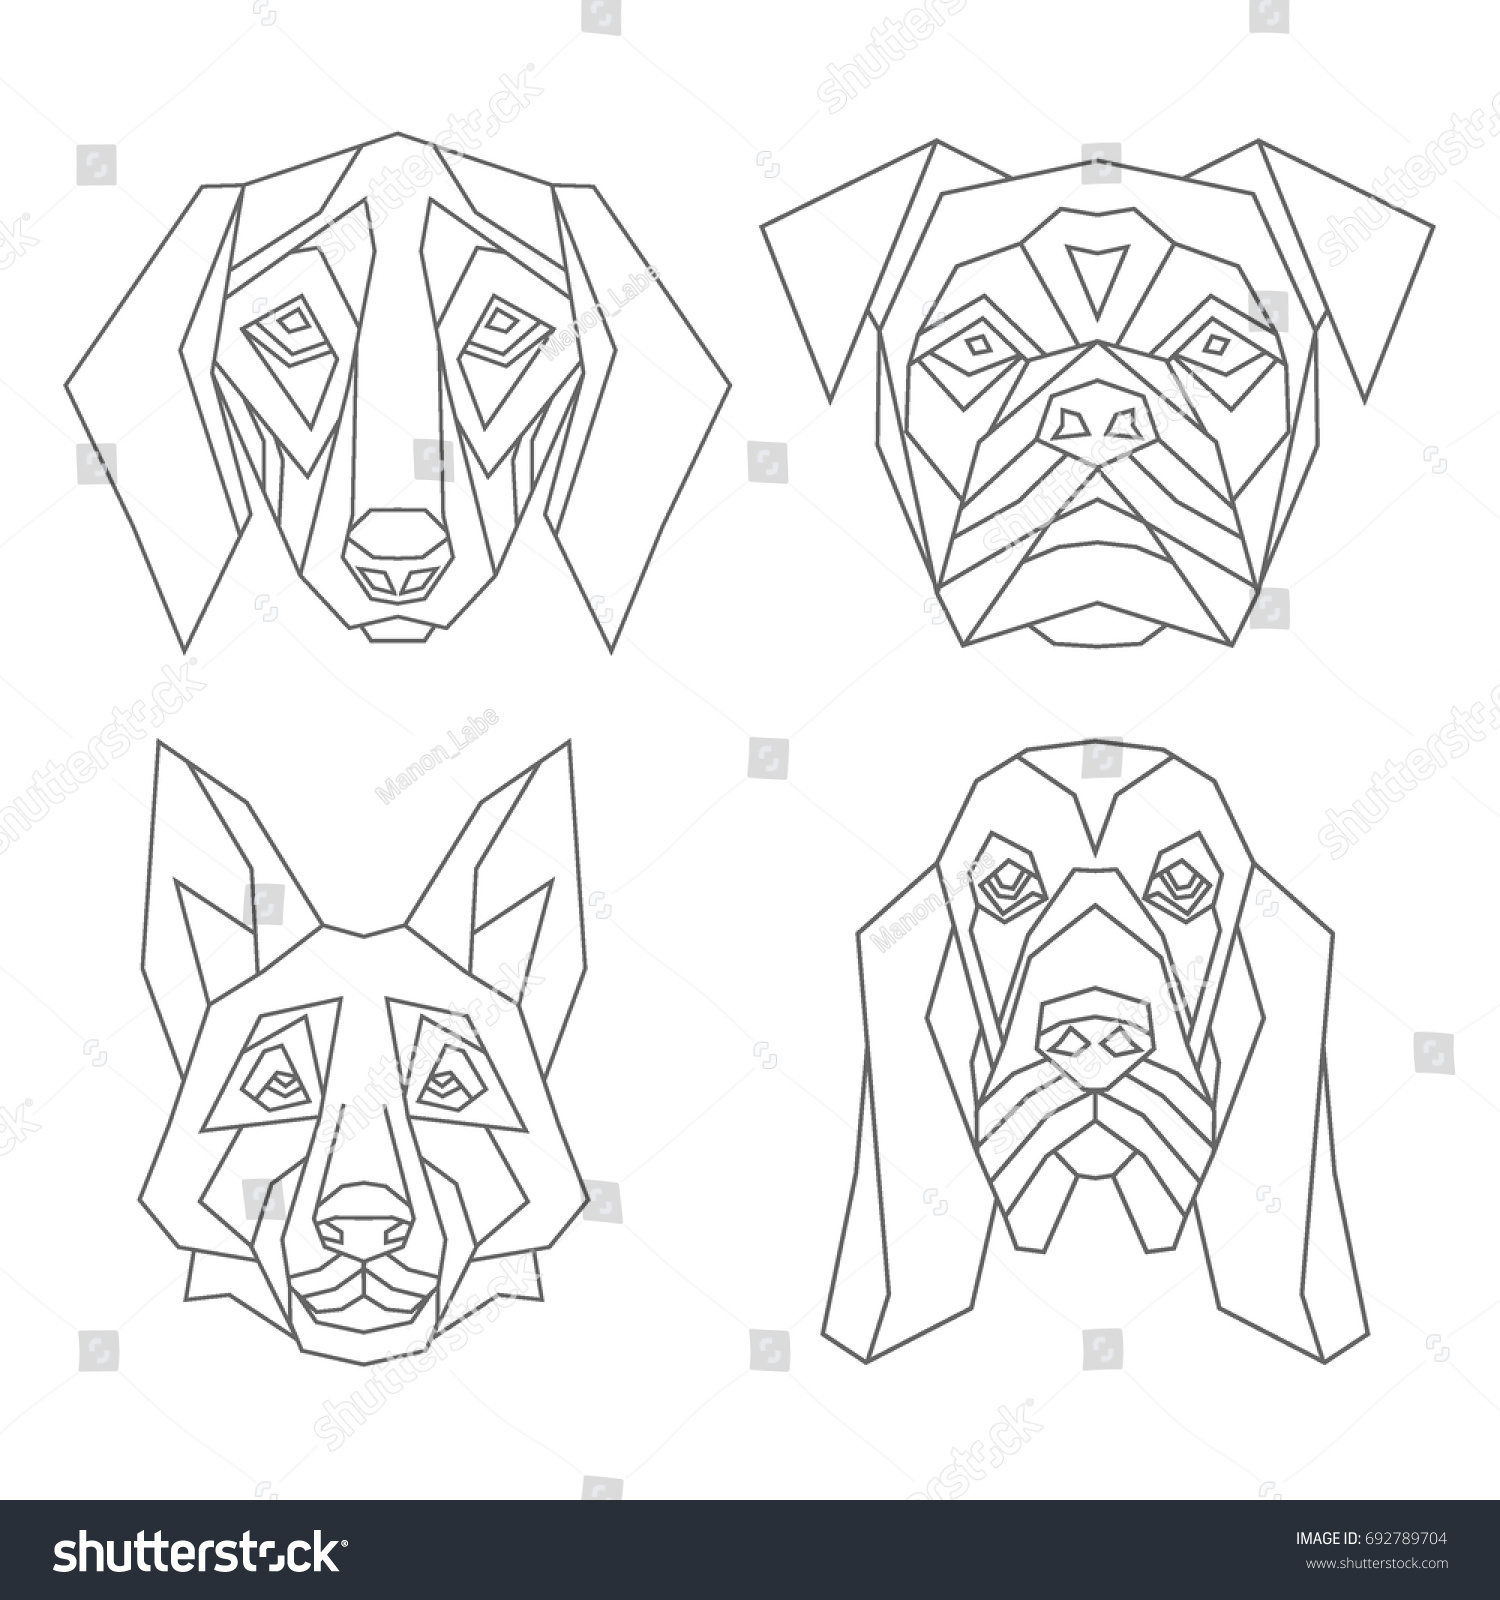 https://image.shutterstock.com/z/stock-vector-geometric-set-of-vector-dog-heads-shepherd-badger-bulldog-spaniel-drawn-in-line-or-triangle-692789704.jpg